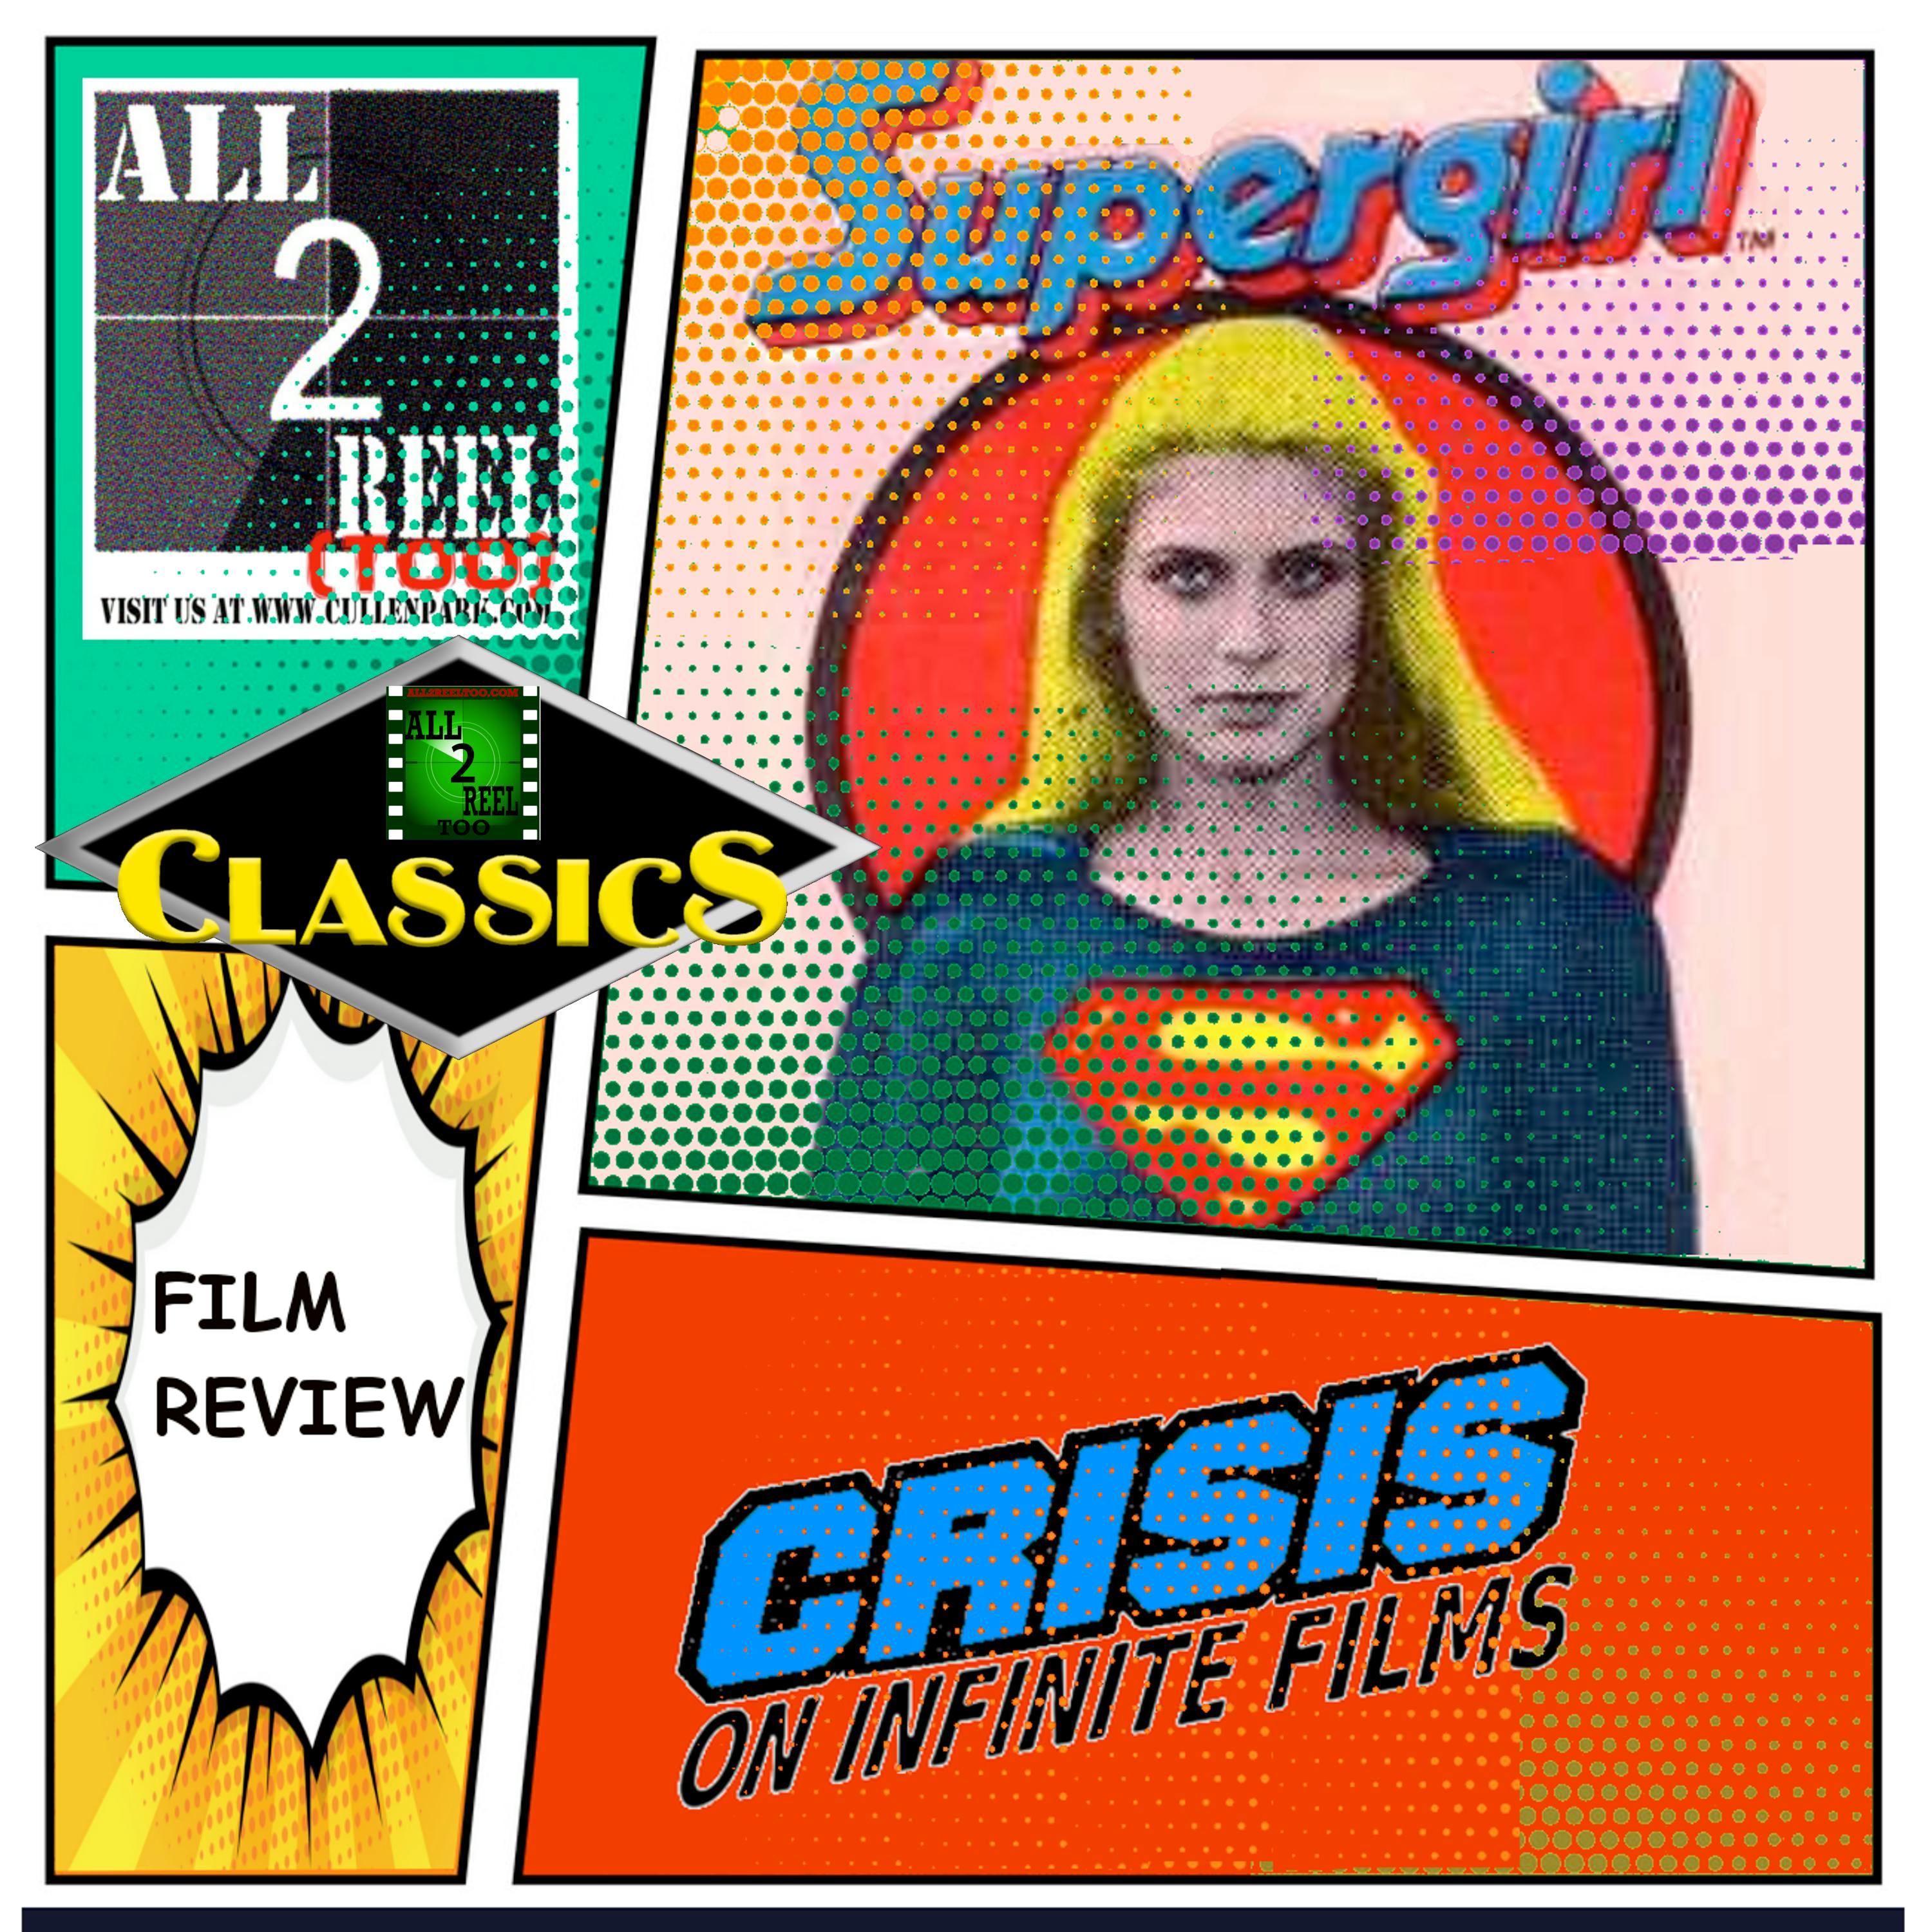 ALL2REELTOO CLASSICS - Supergirl (1984)-Crisis On Infinite Films